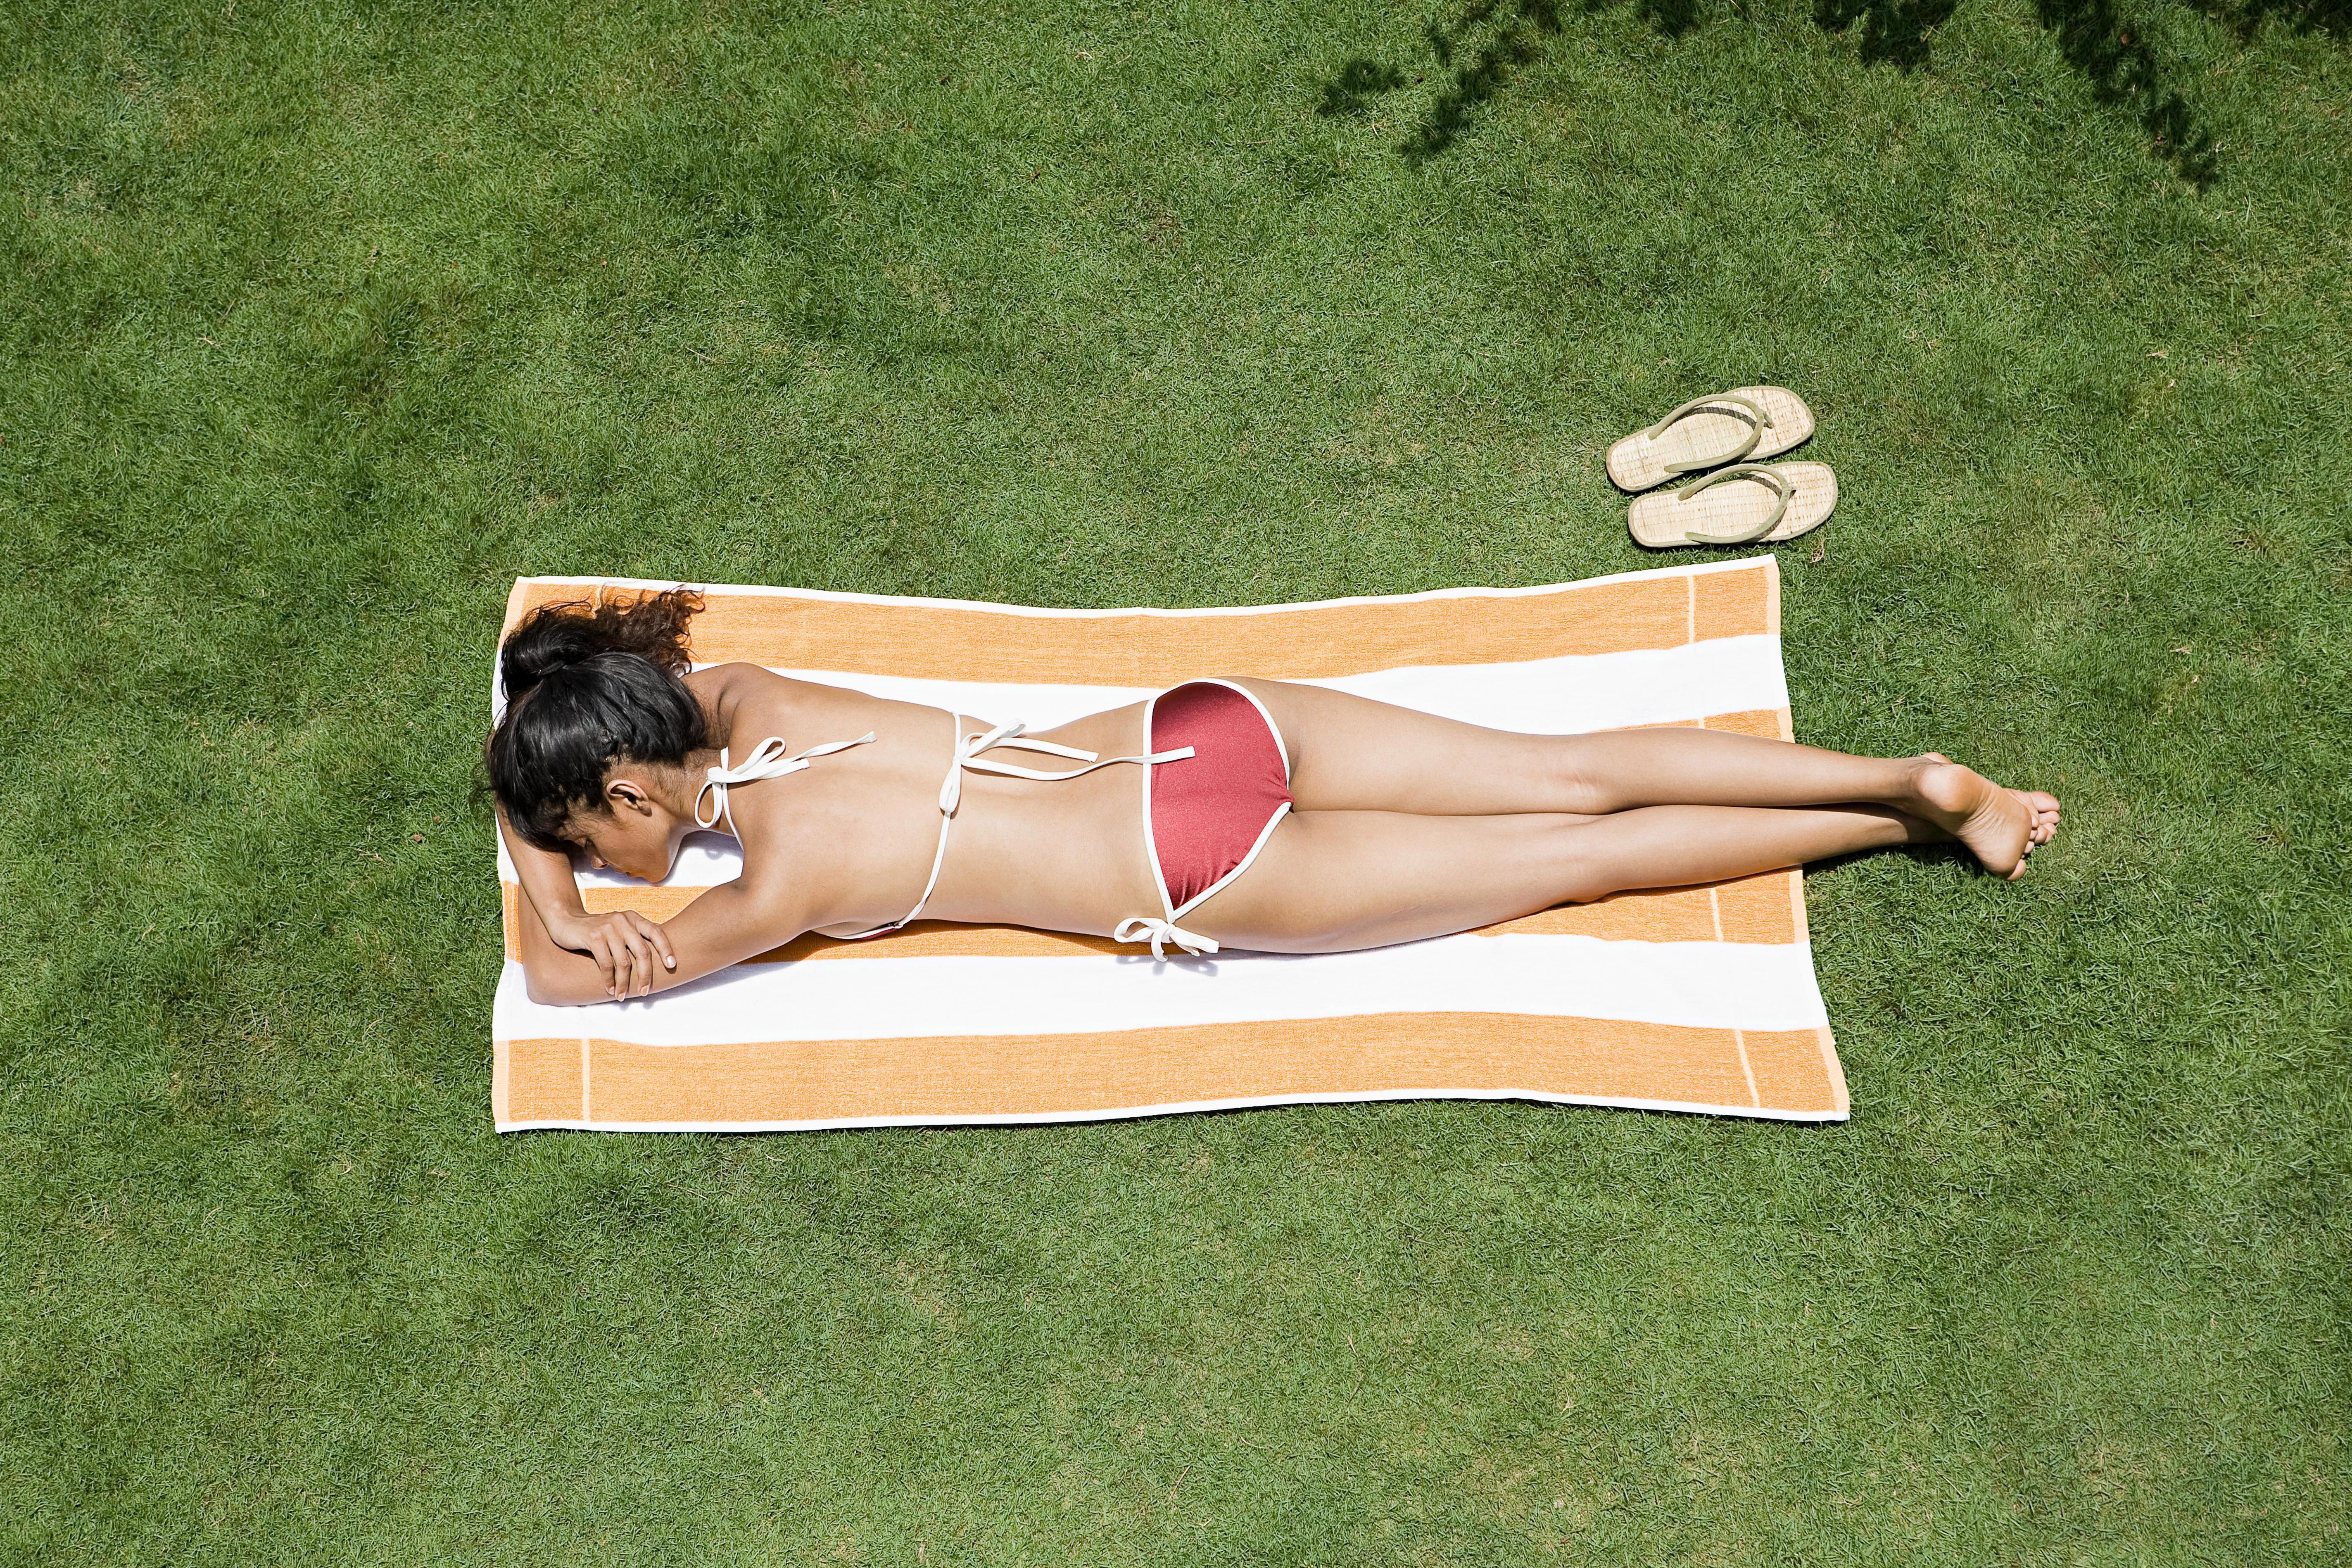 christopher bosse add sun tanning nude photo